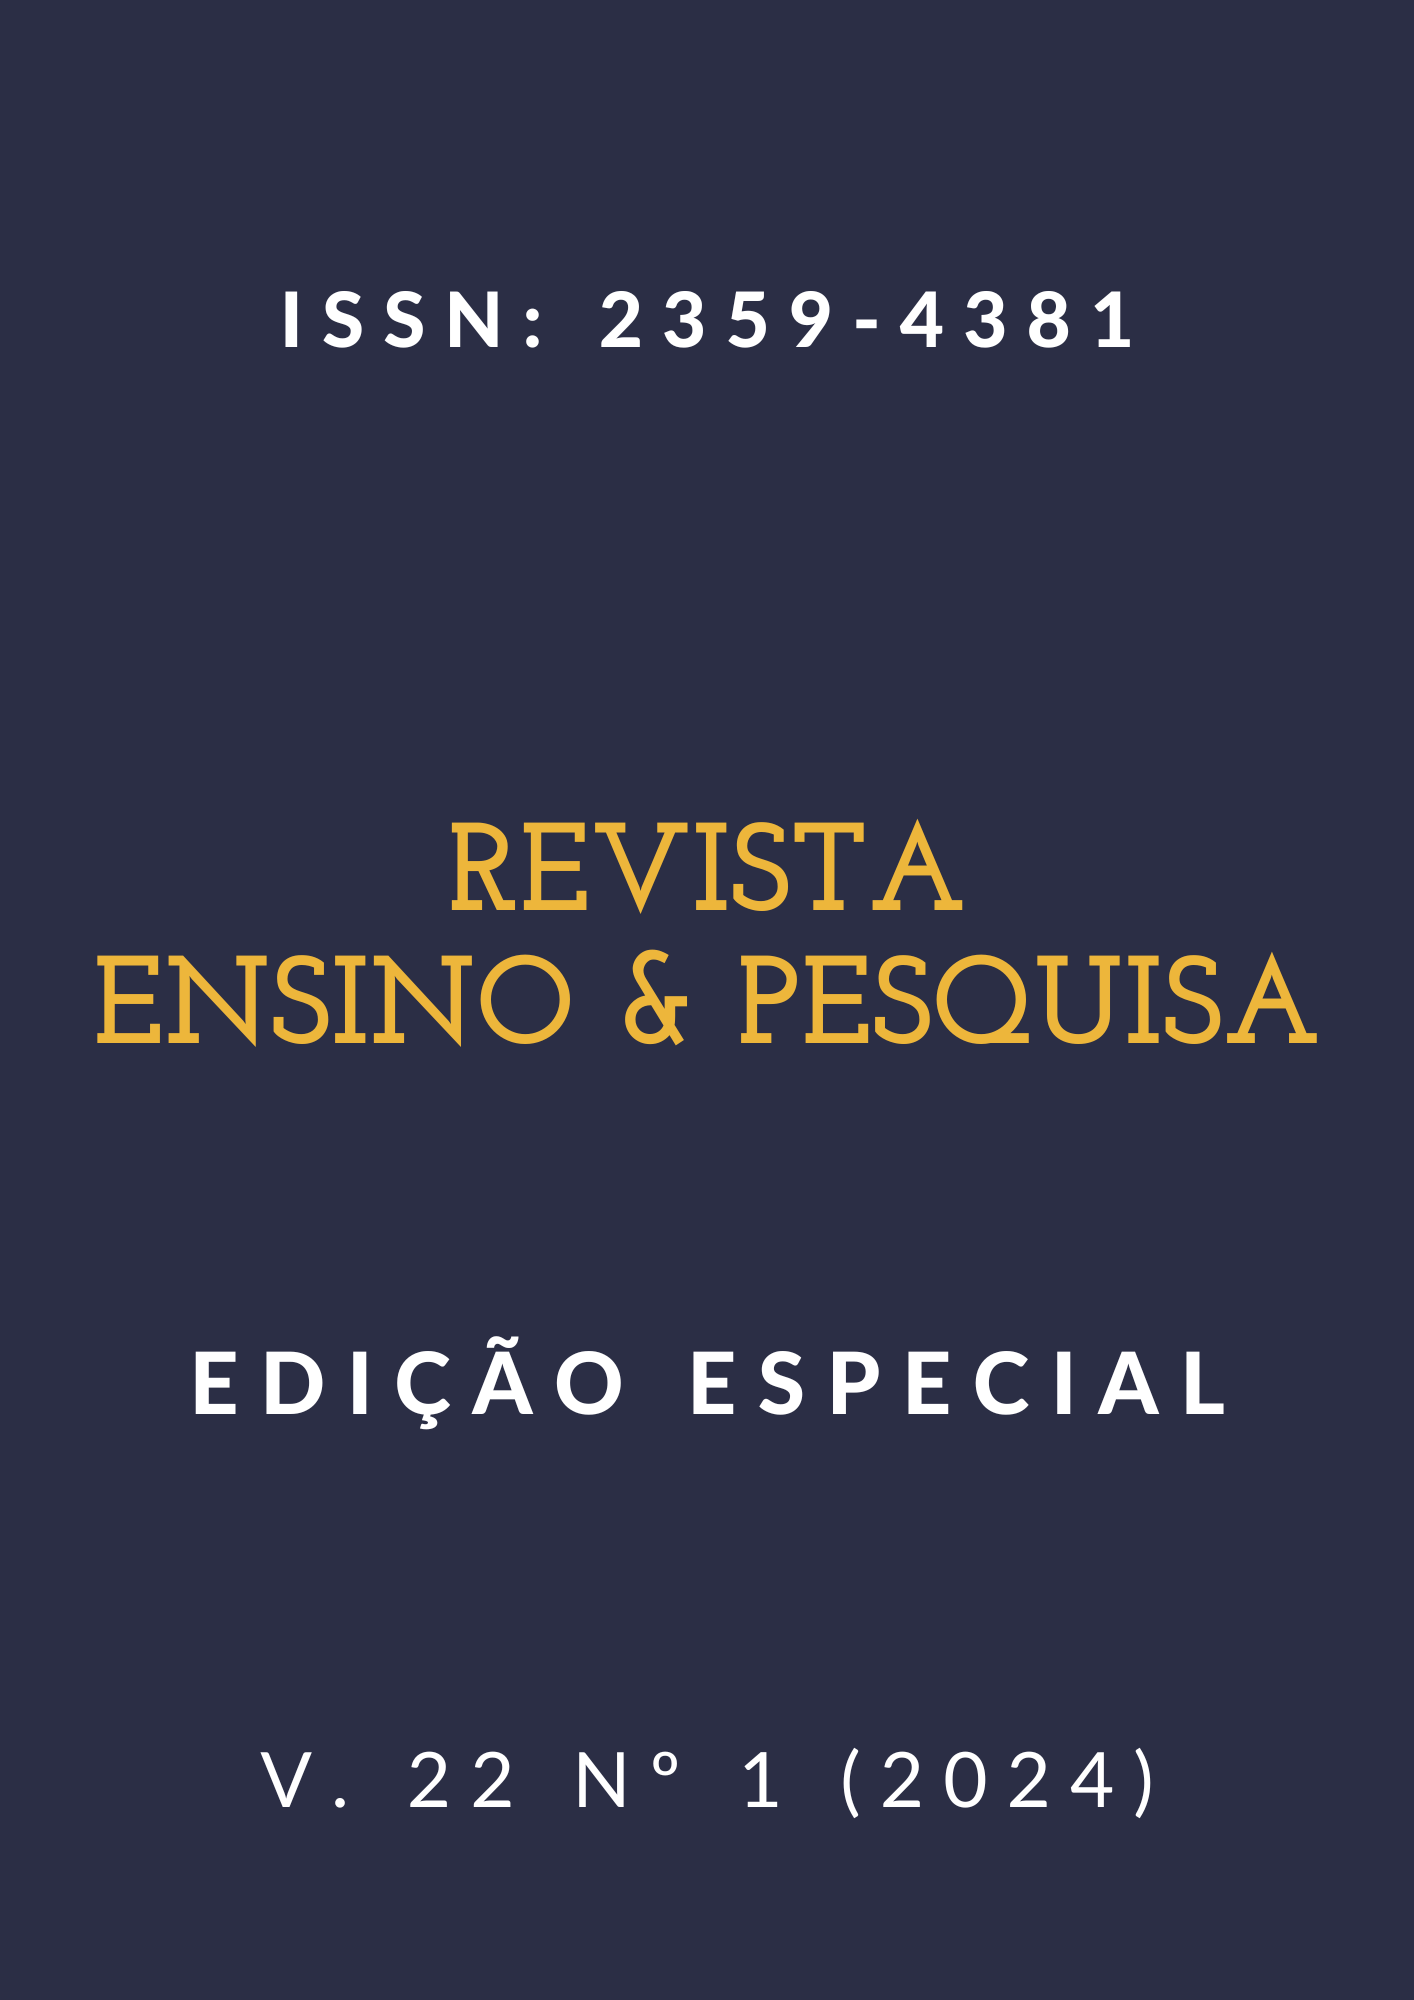 					Ver Vol. 22 Núm. 1 (2024): Ensino & Pesquisa 
				